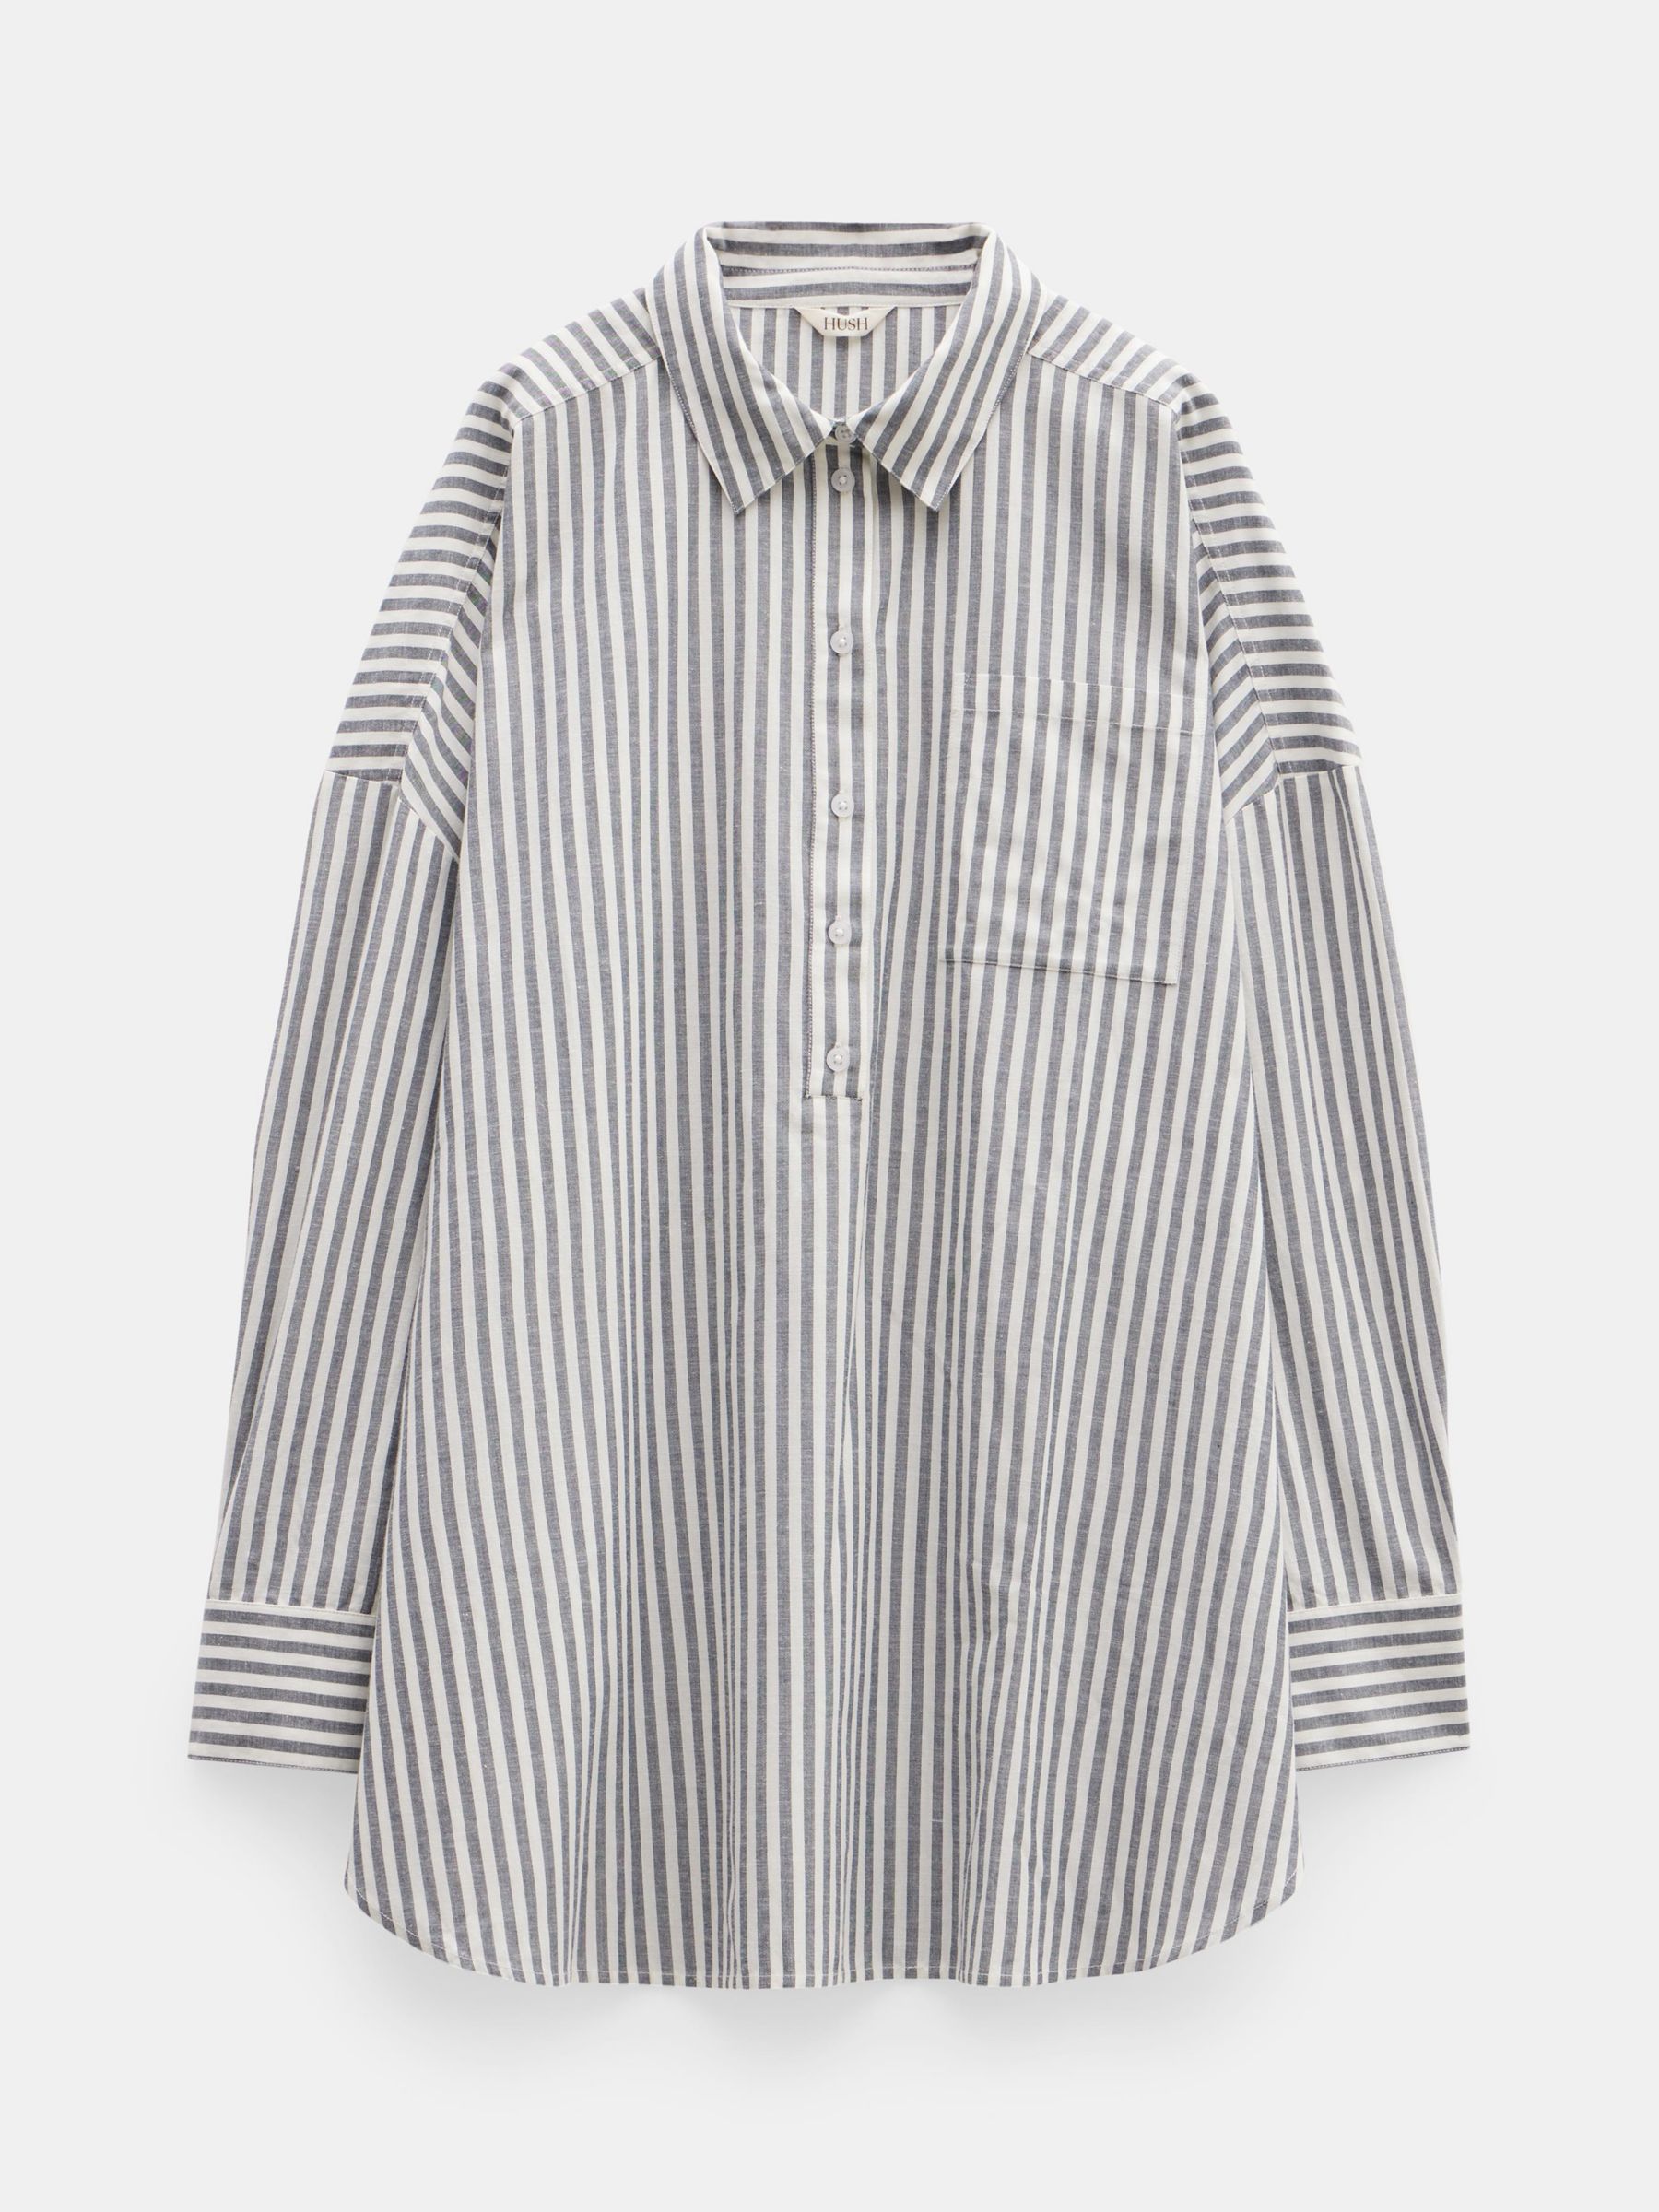 HUSH Skye Beach Shirt Dress, Navy/White Stripe, S-M